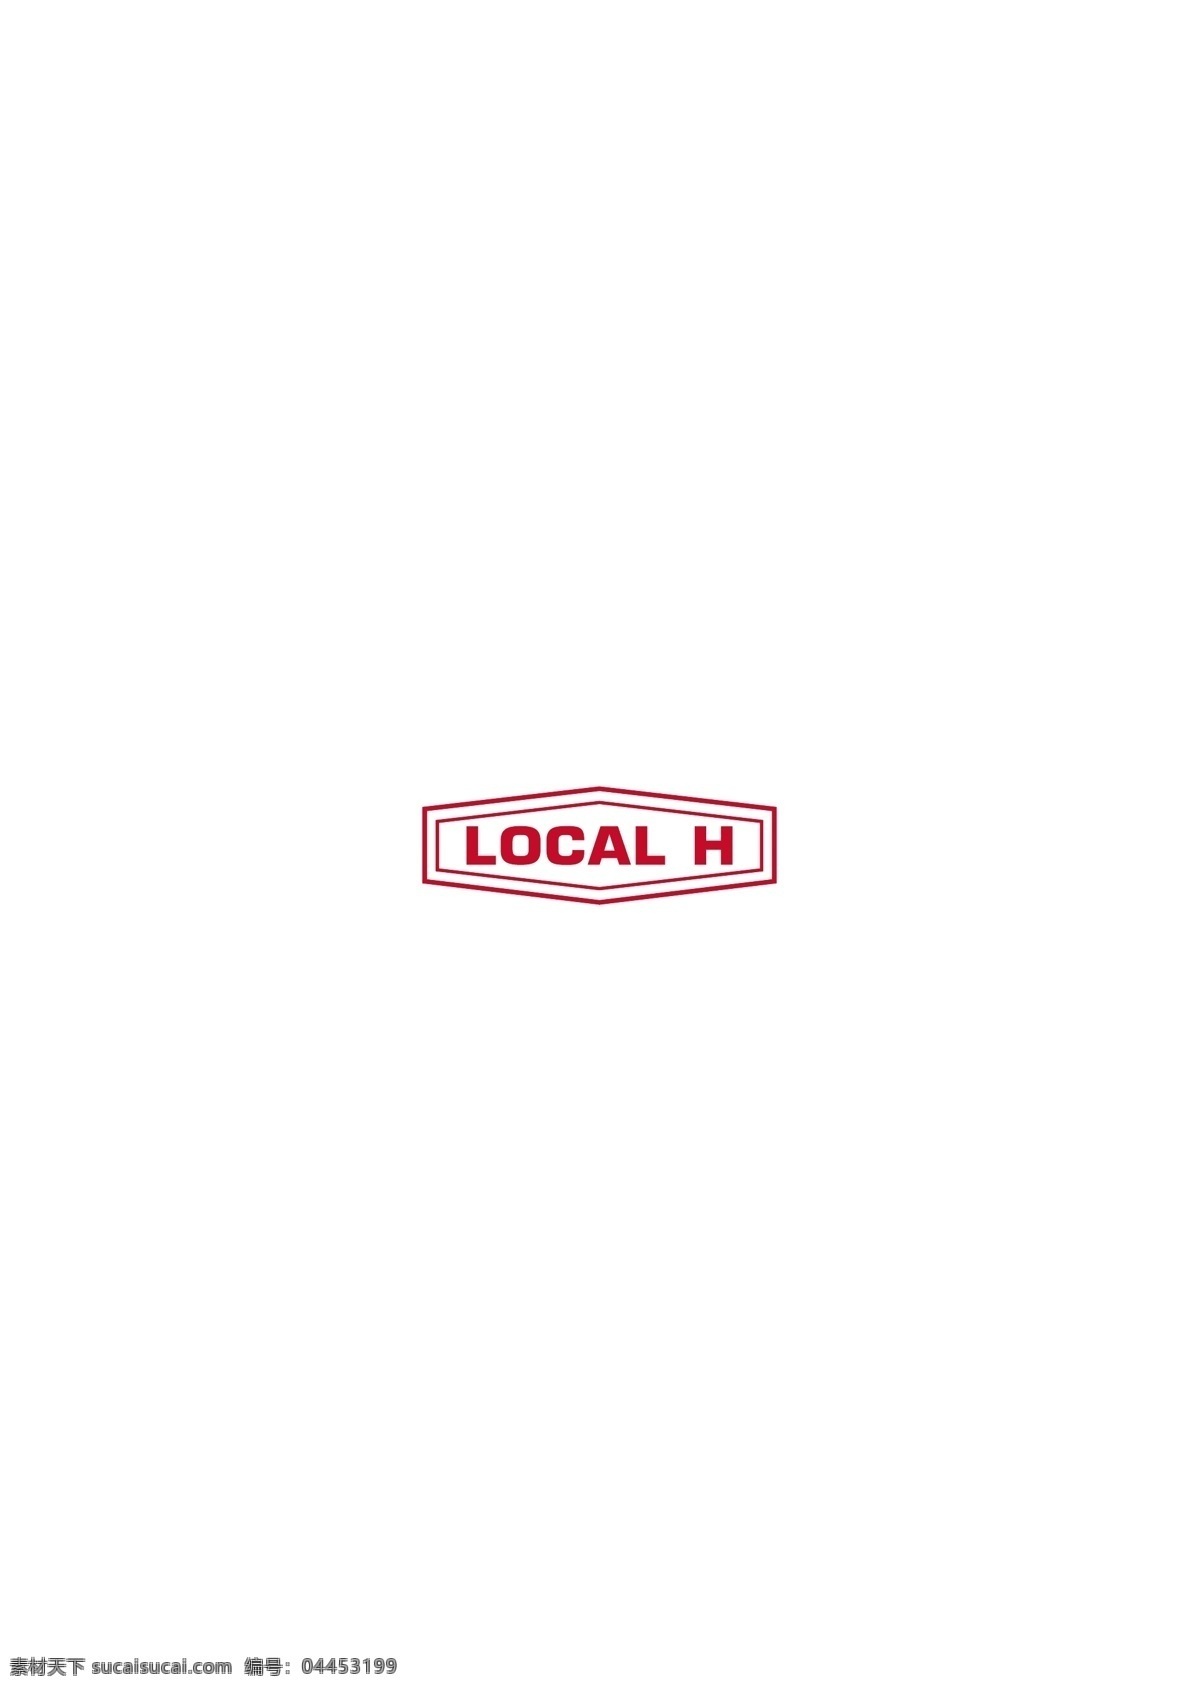 logo大全 logo 设计欣赏 商业矢量 矢量下载 localh2 音乐 标志设计 欣赏 网页矢量 矢量图 其他矢量图